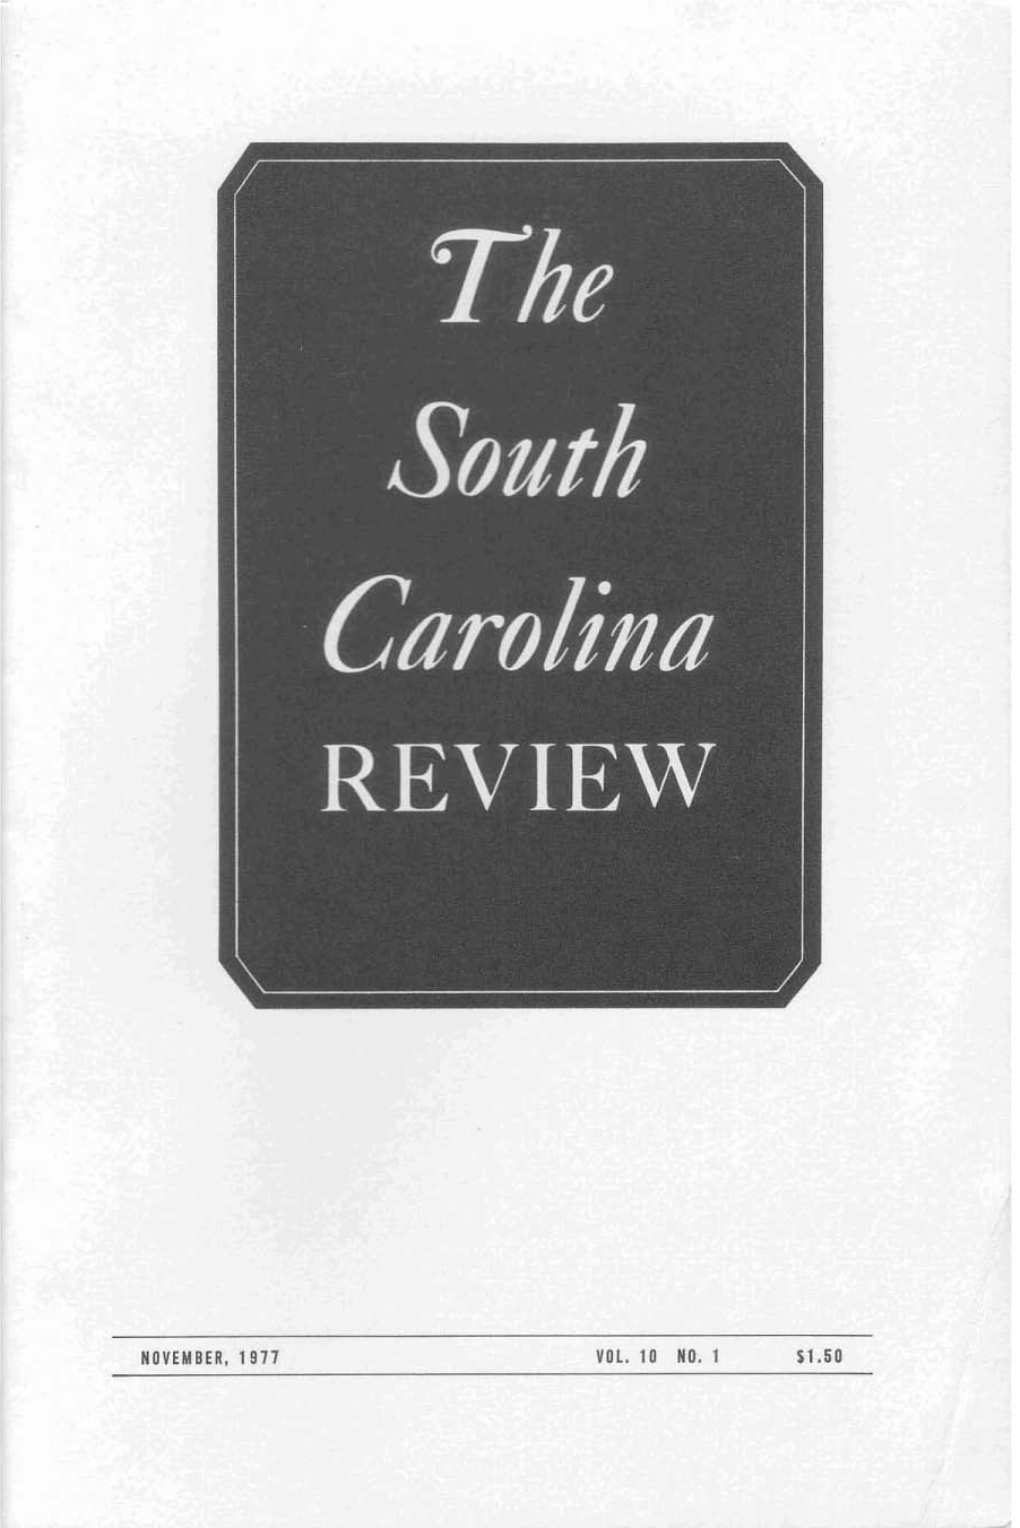 NOVEMBER. 1977 VOL. 10 NO. 1 11.50 the South Carolina Review EDITORS RIMAXD J